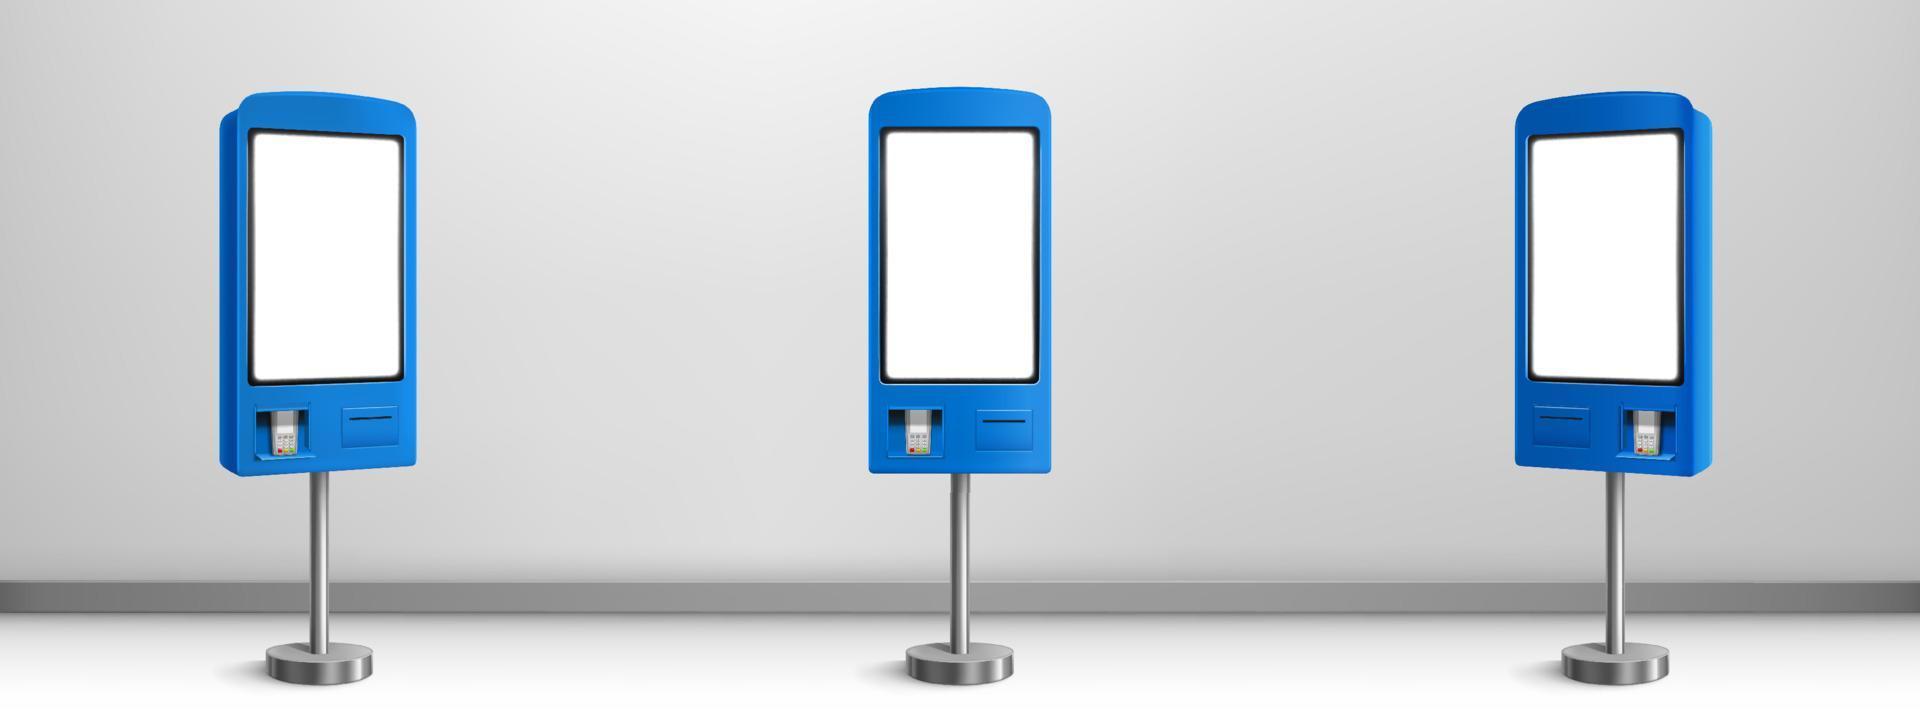 Self payment kiosk, order machine vector